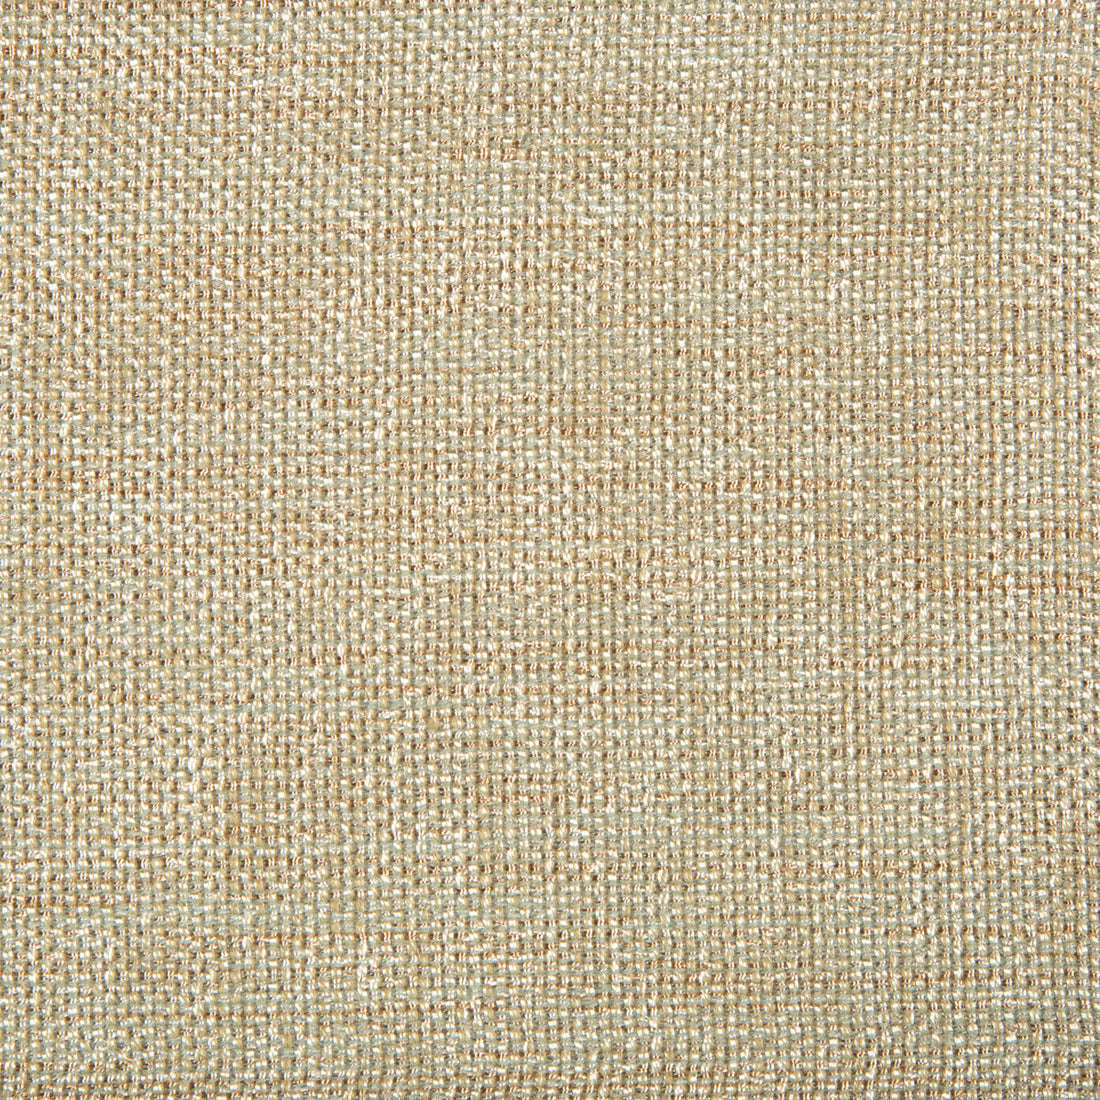 Kravet Smart fabric in 34939-415 color - pattern 34939.415.0 - by Kravet Smart